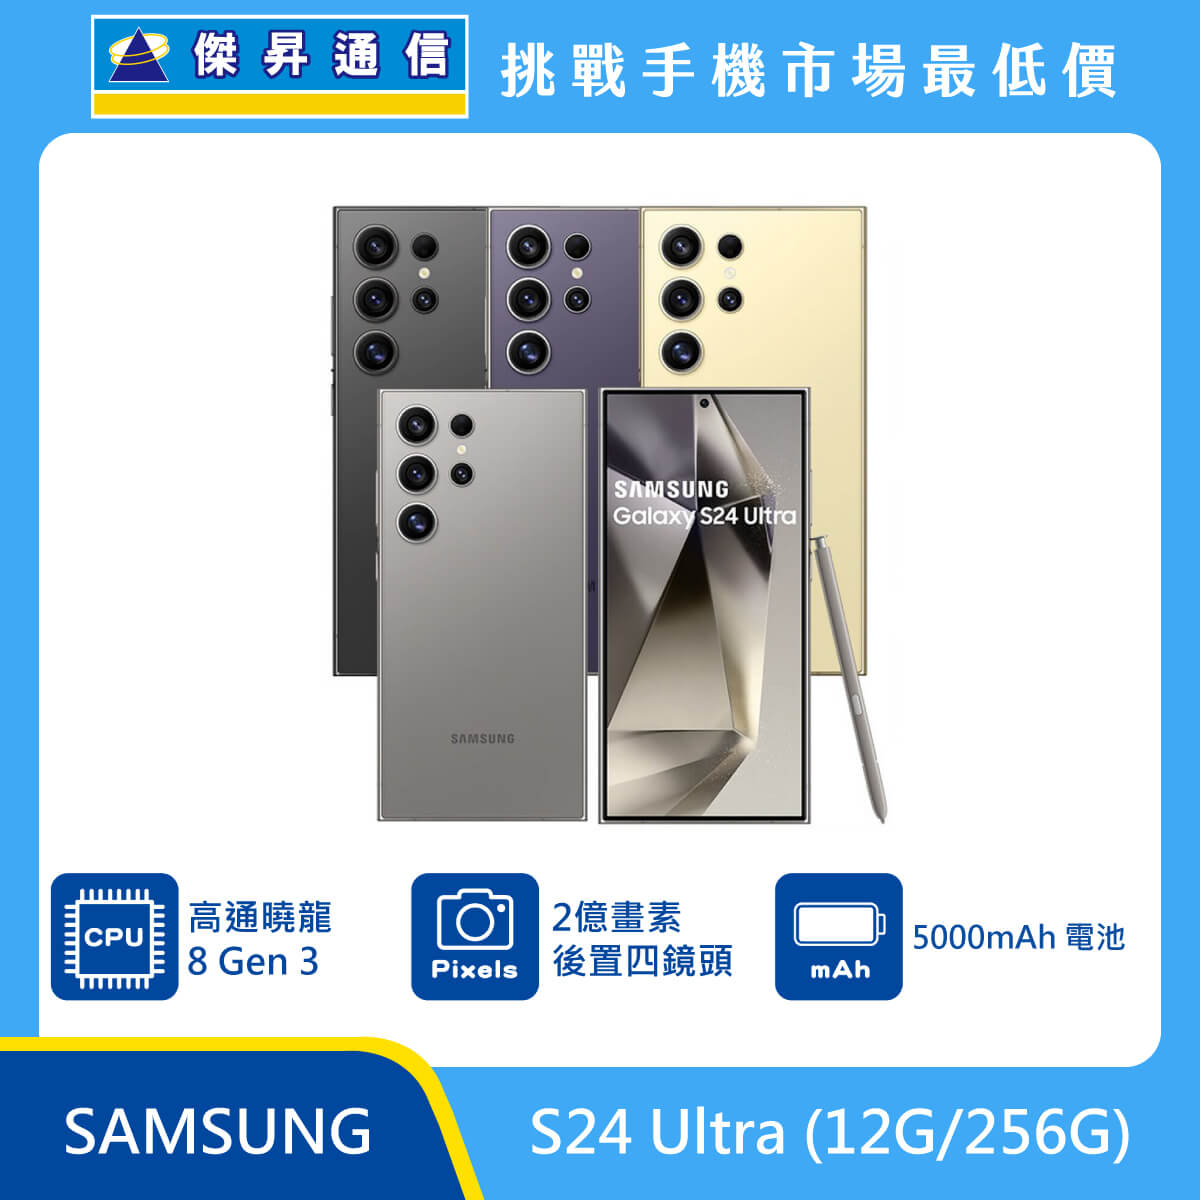 SAMSUNG S24 Ultra (12G/256G)